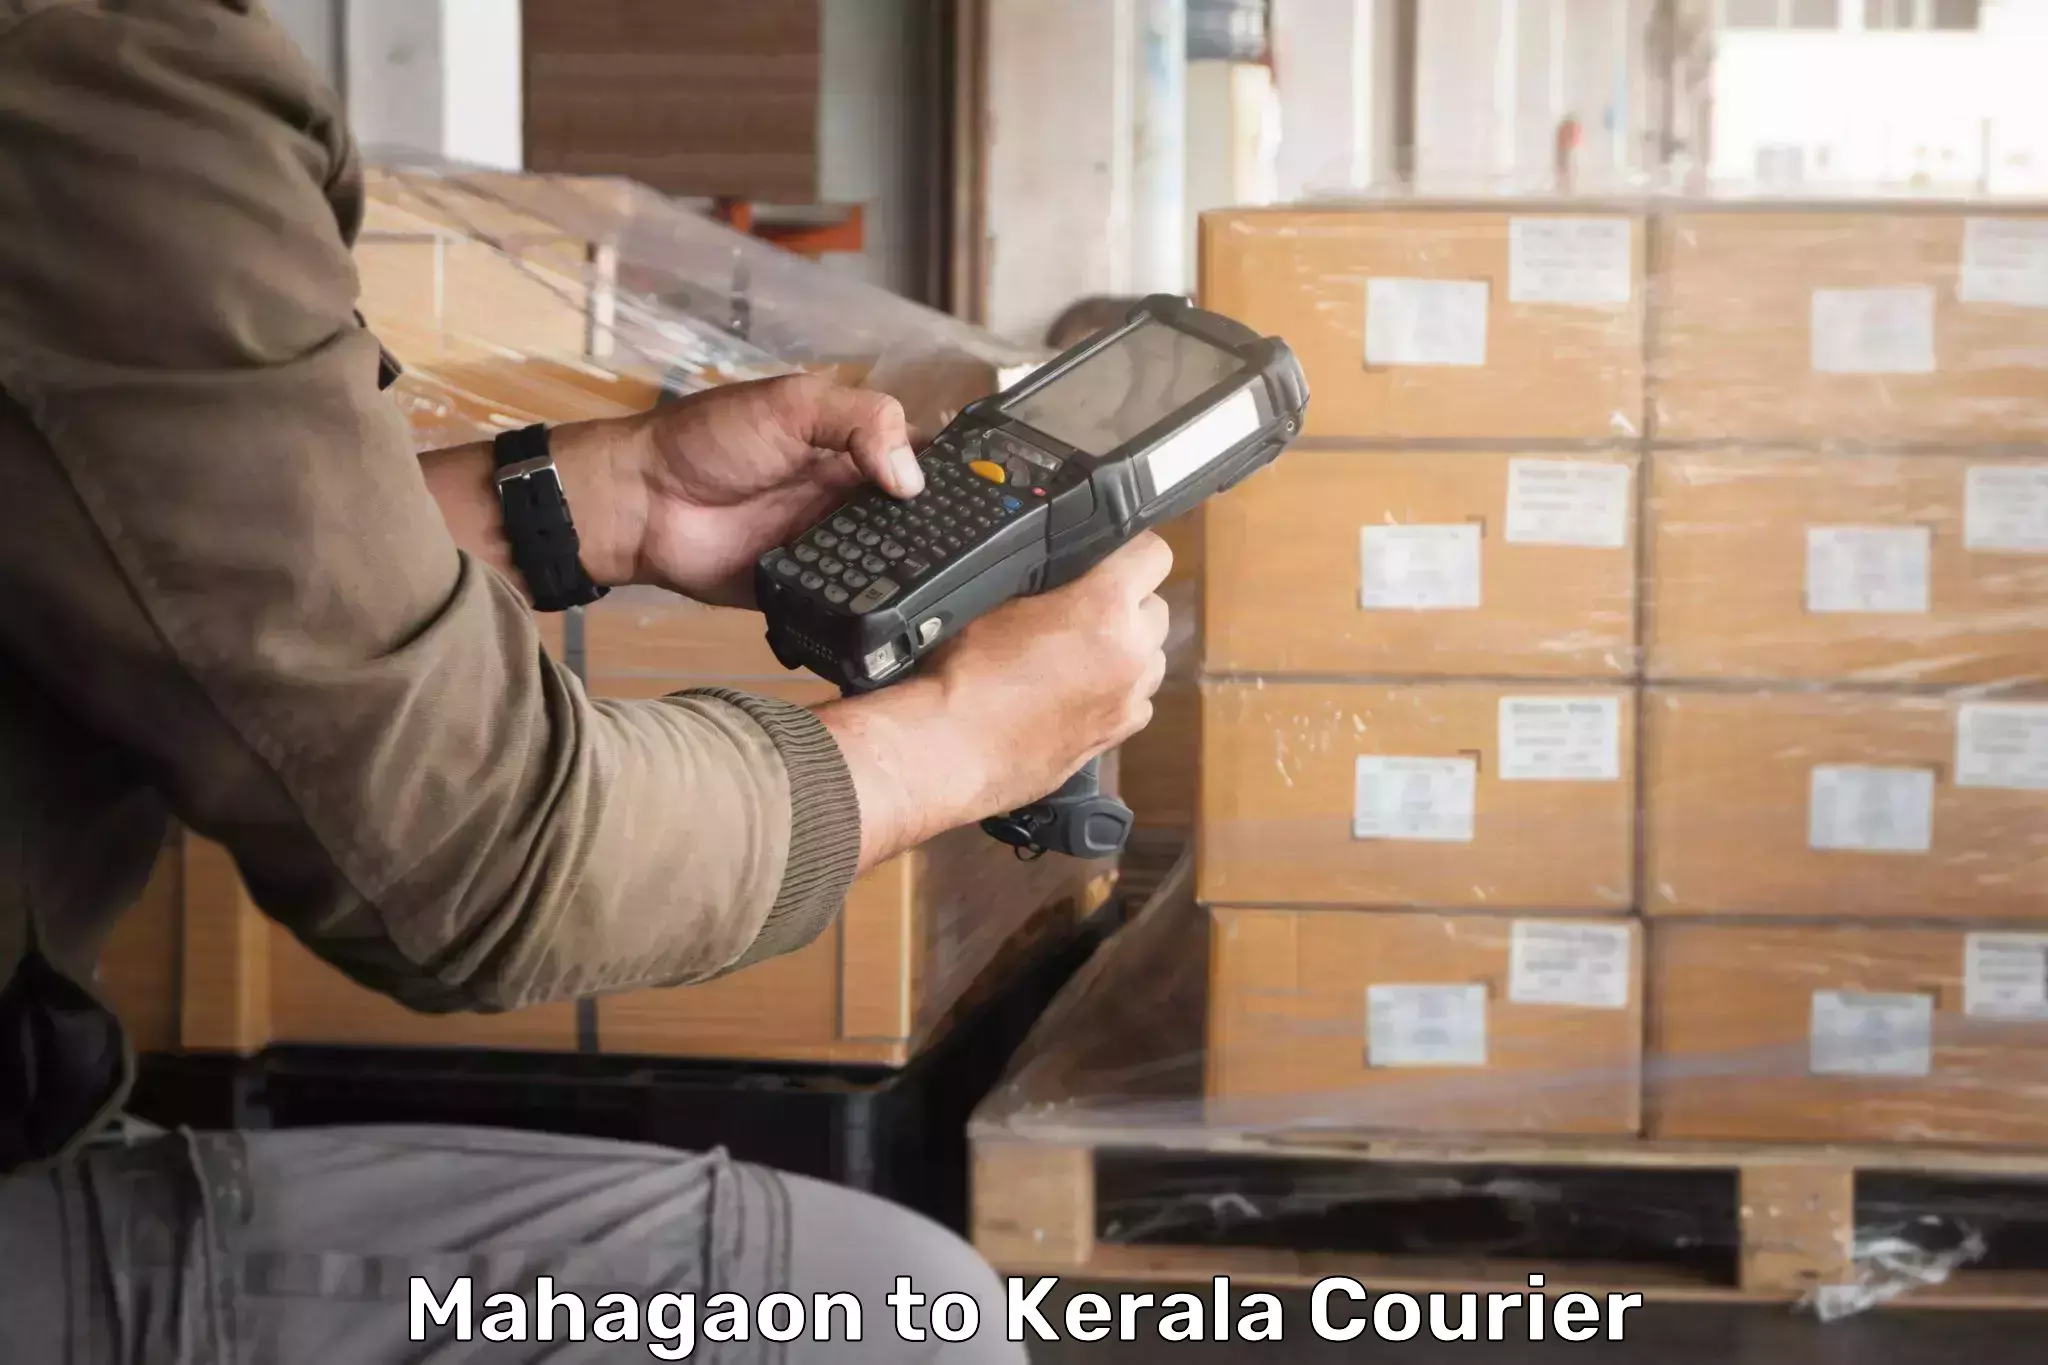 Bulk courier orders Mahagaon to Koyilandy